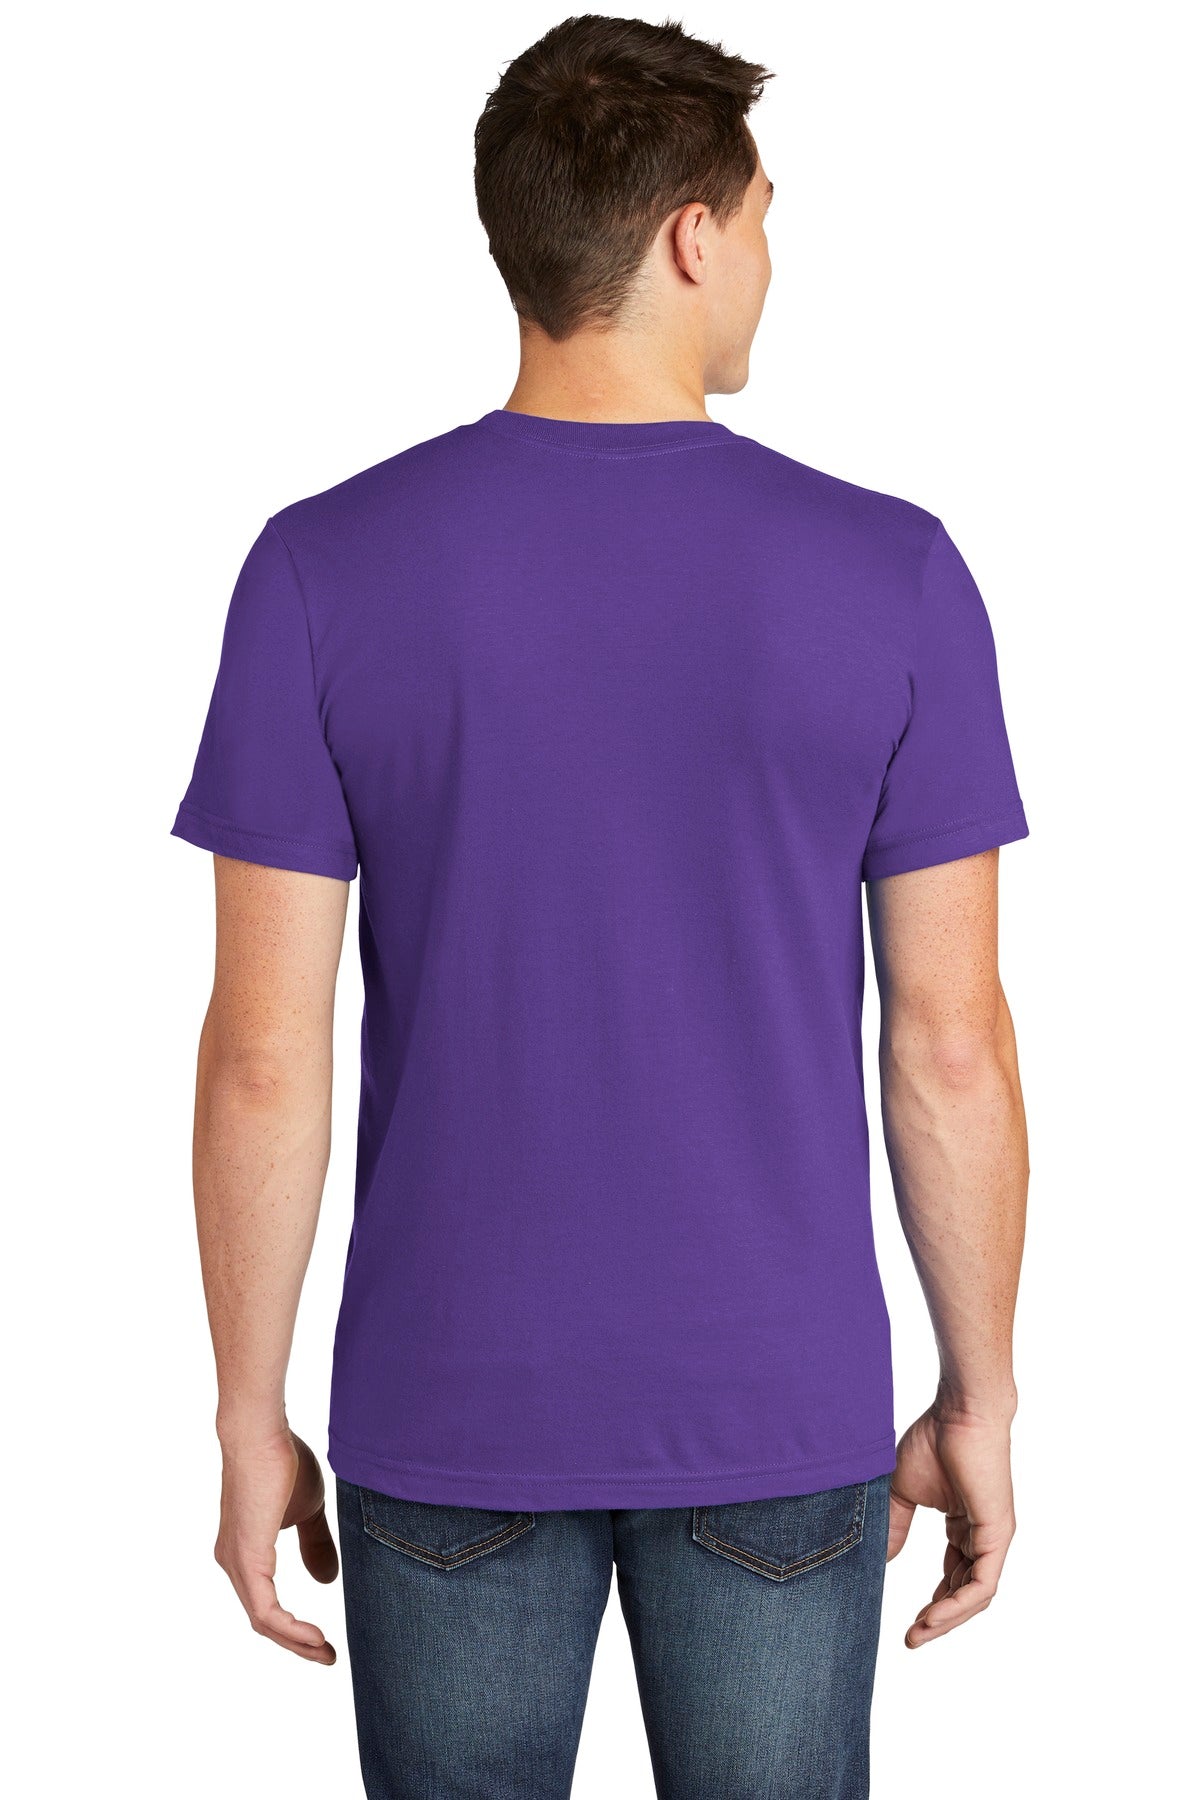 American Apparel ® Fine Jersey T-Shirt. 2001W [Purple] - DFW Impression